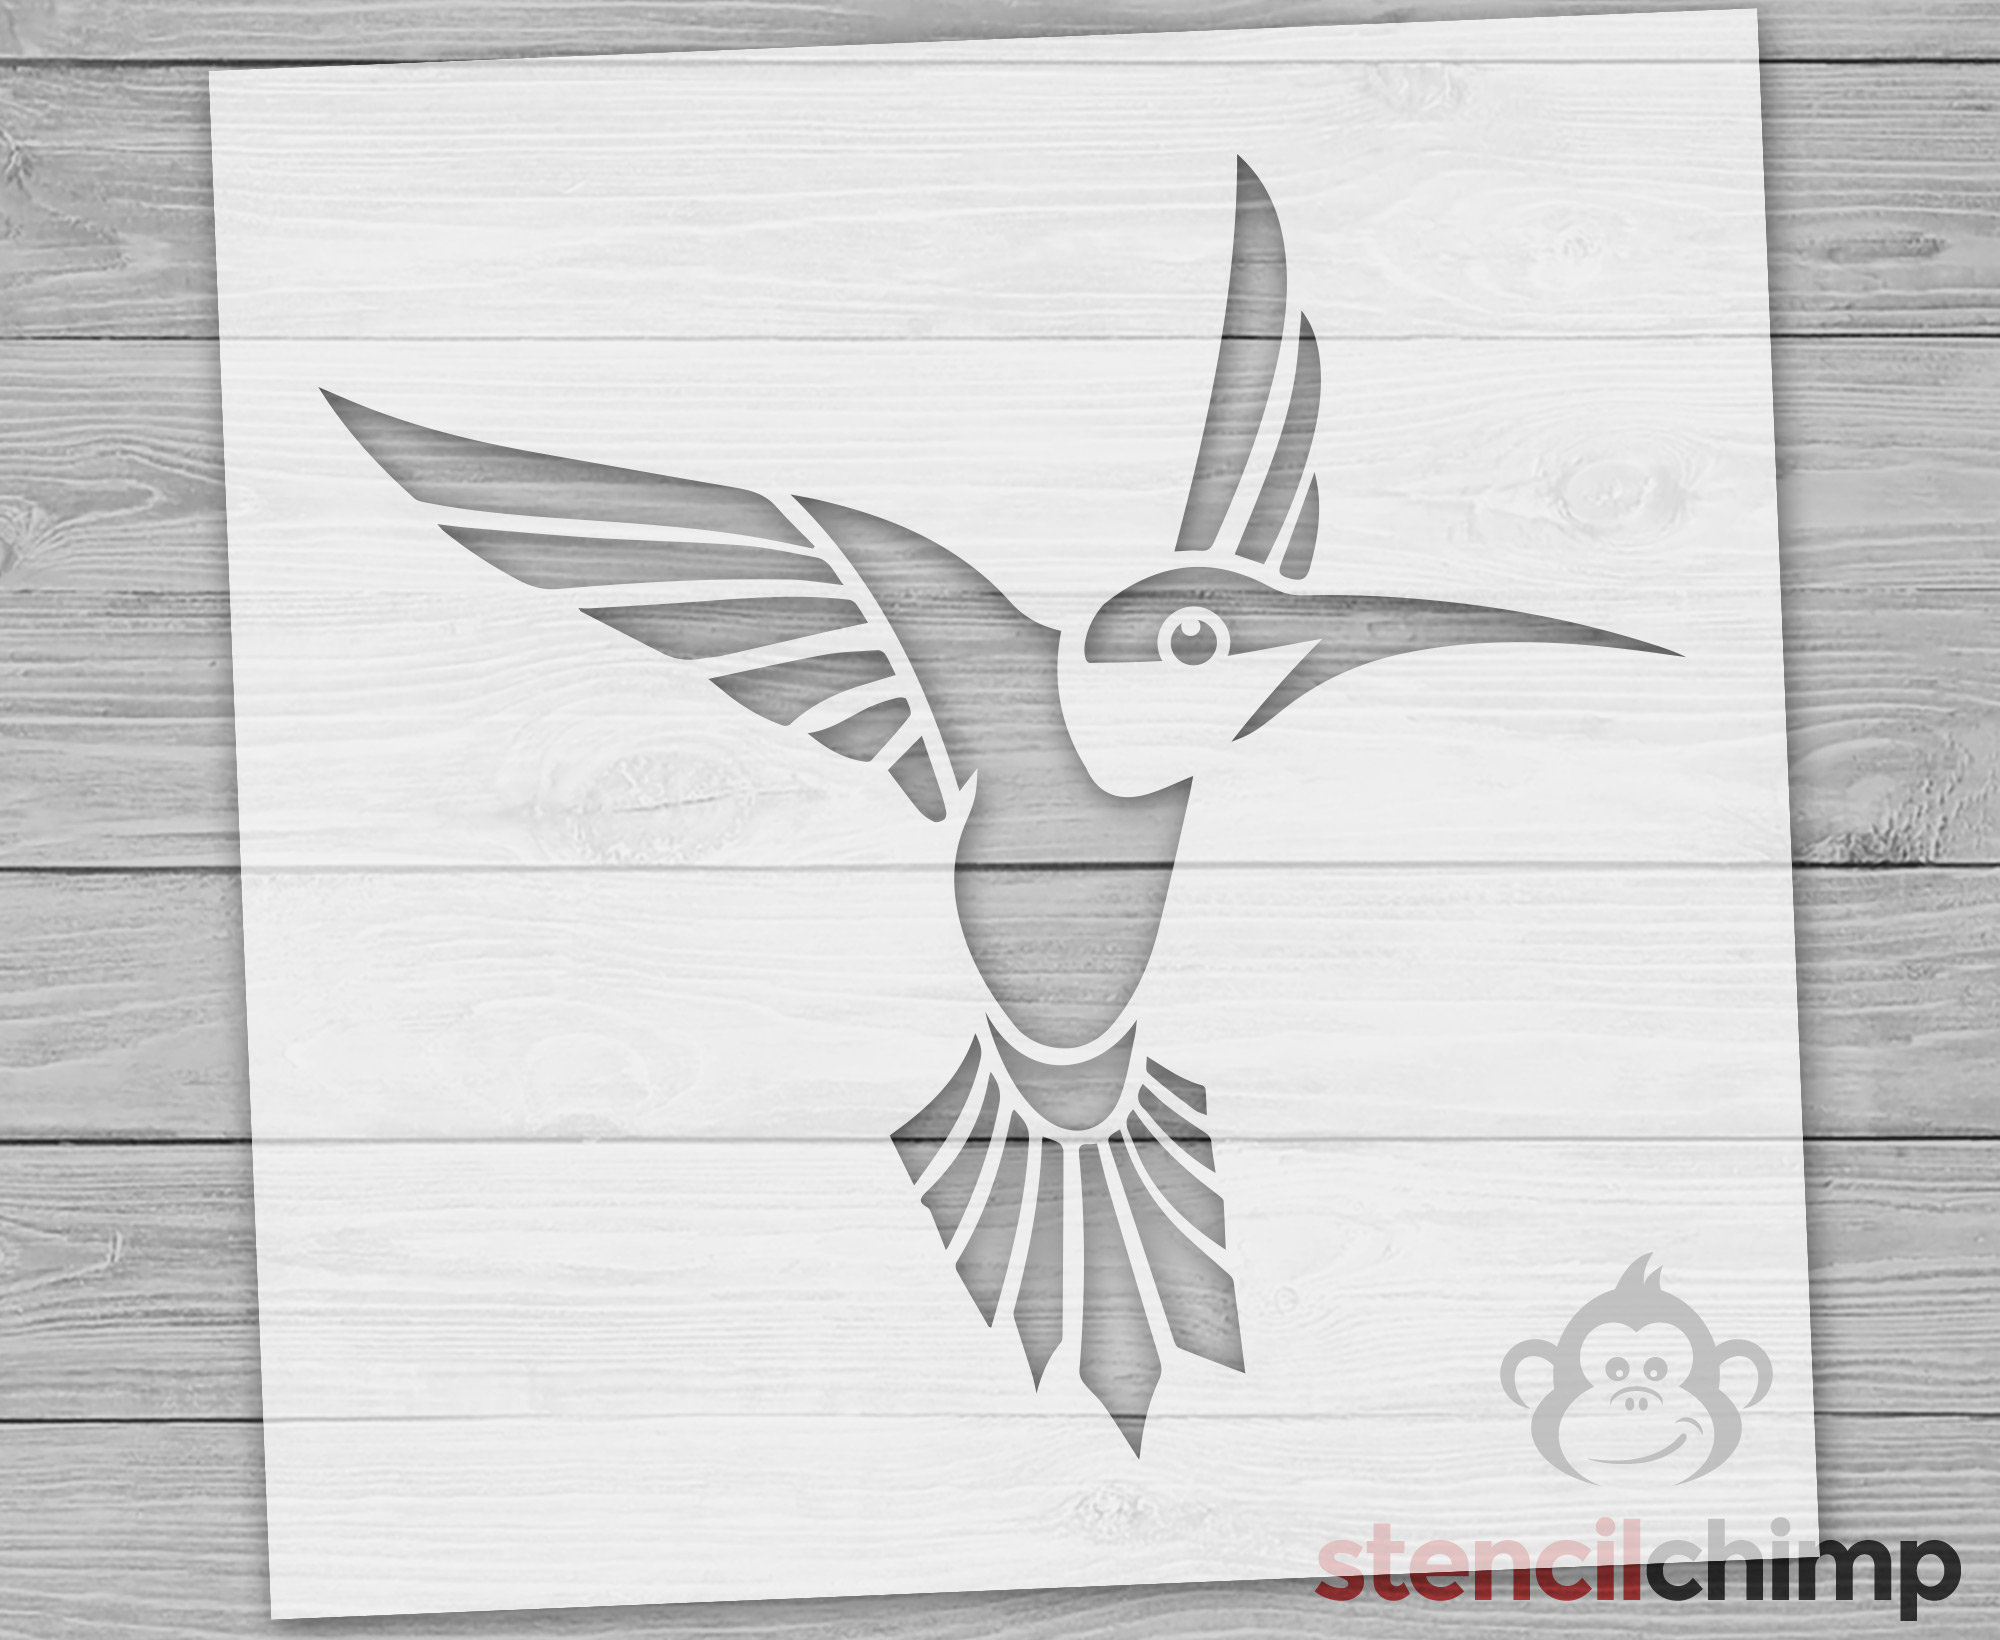 Hummingbird flutters onto new U.S. postcard stamps Feb. 7